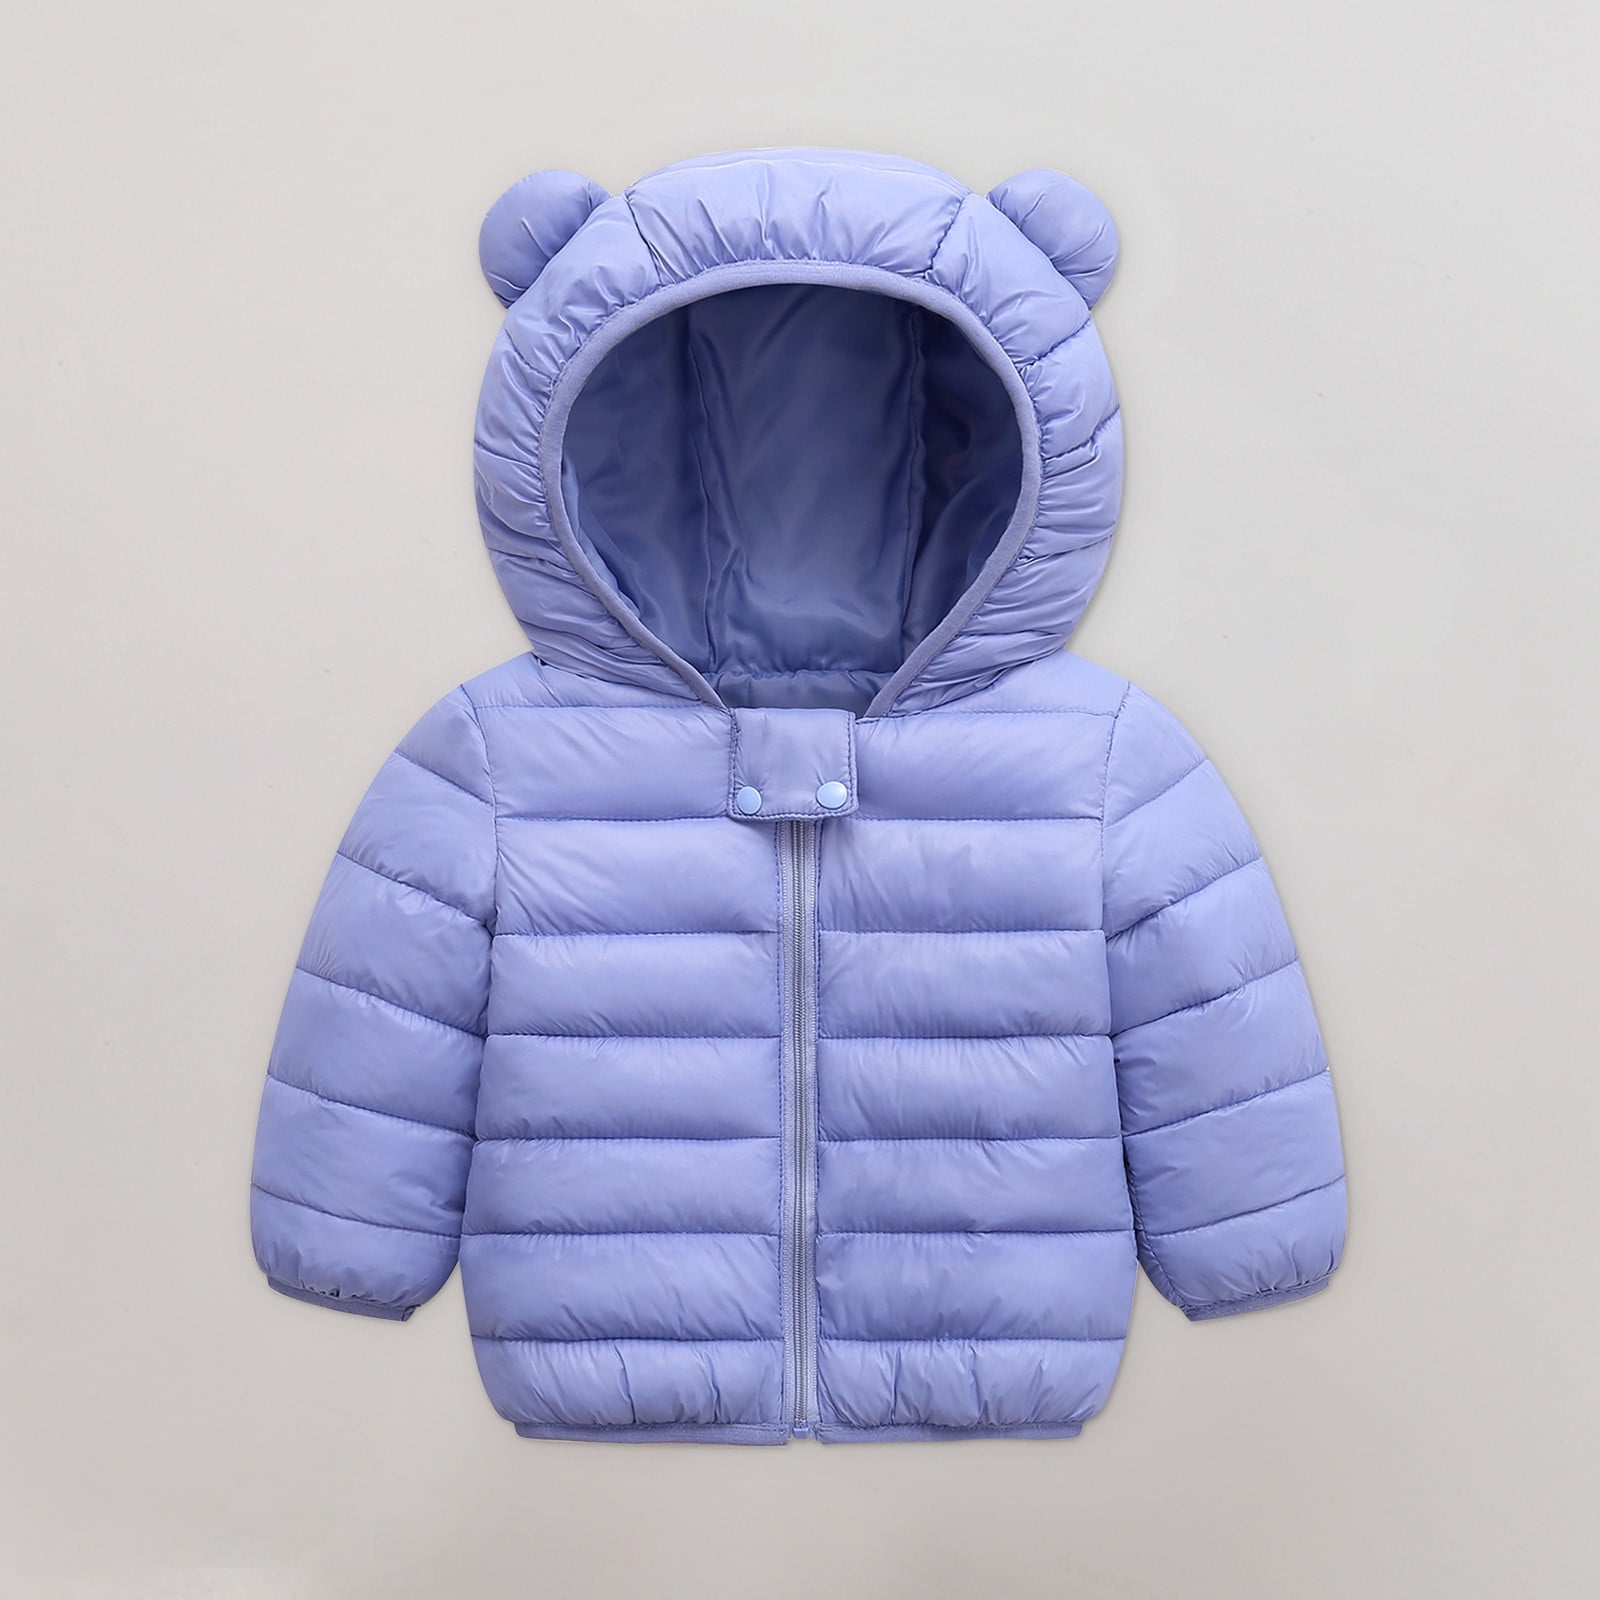 QISIWOLE Toddler Baby Kids Girls Soft Sweater Coat Winter Thick Warm ...